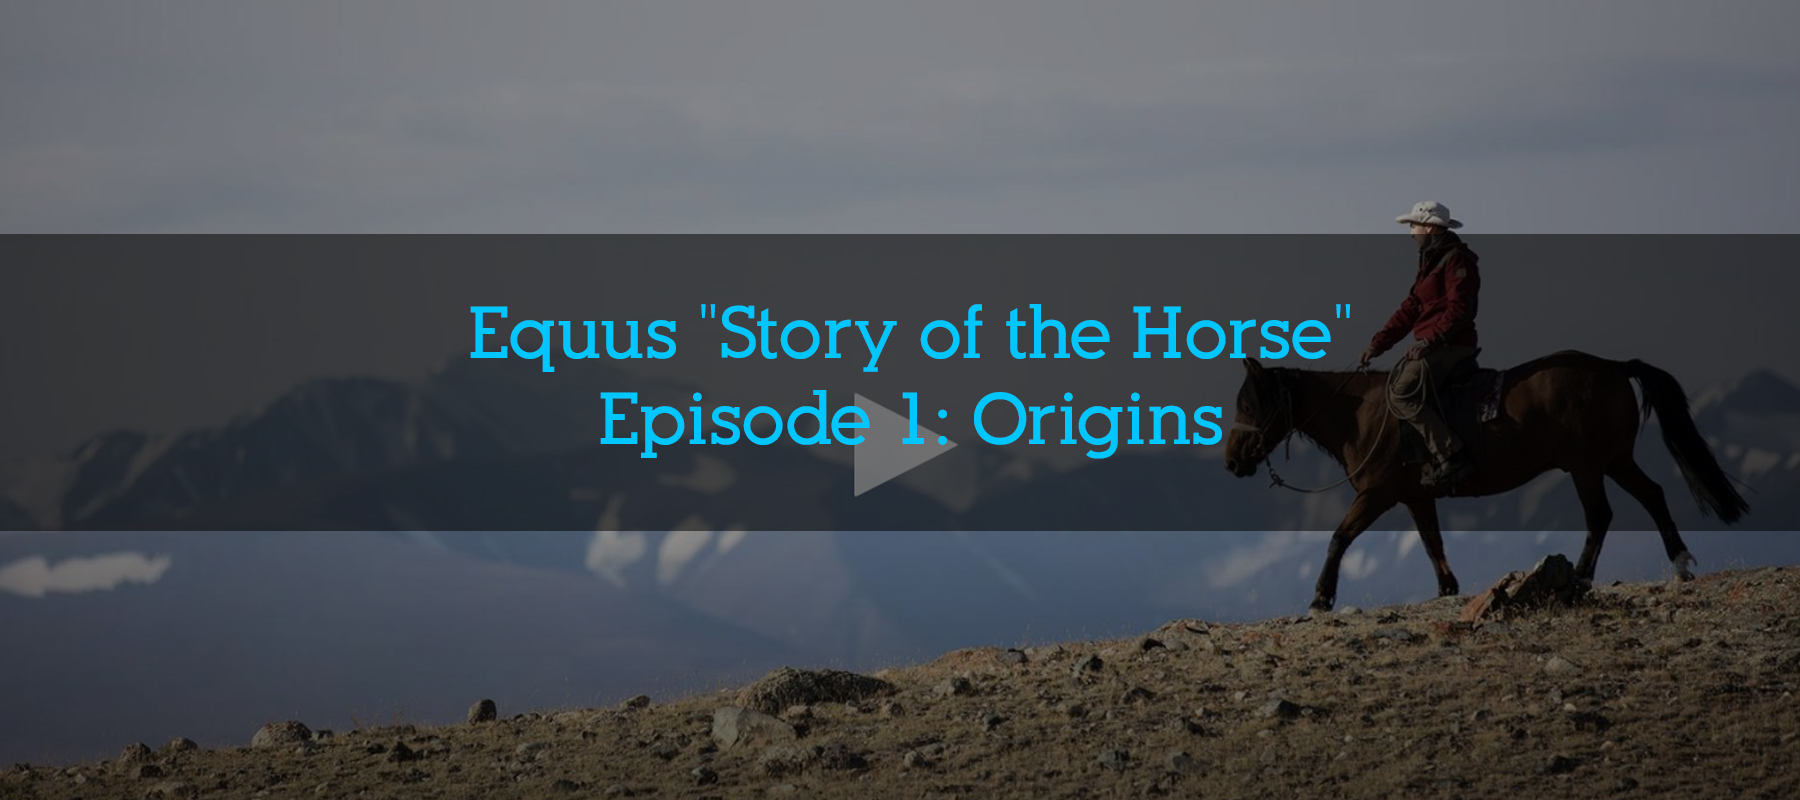 Equus "Story of the Horse" | Episode 1: Origins